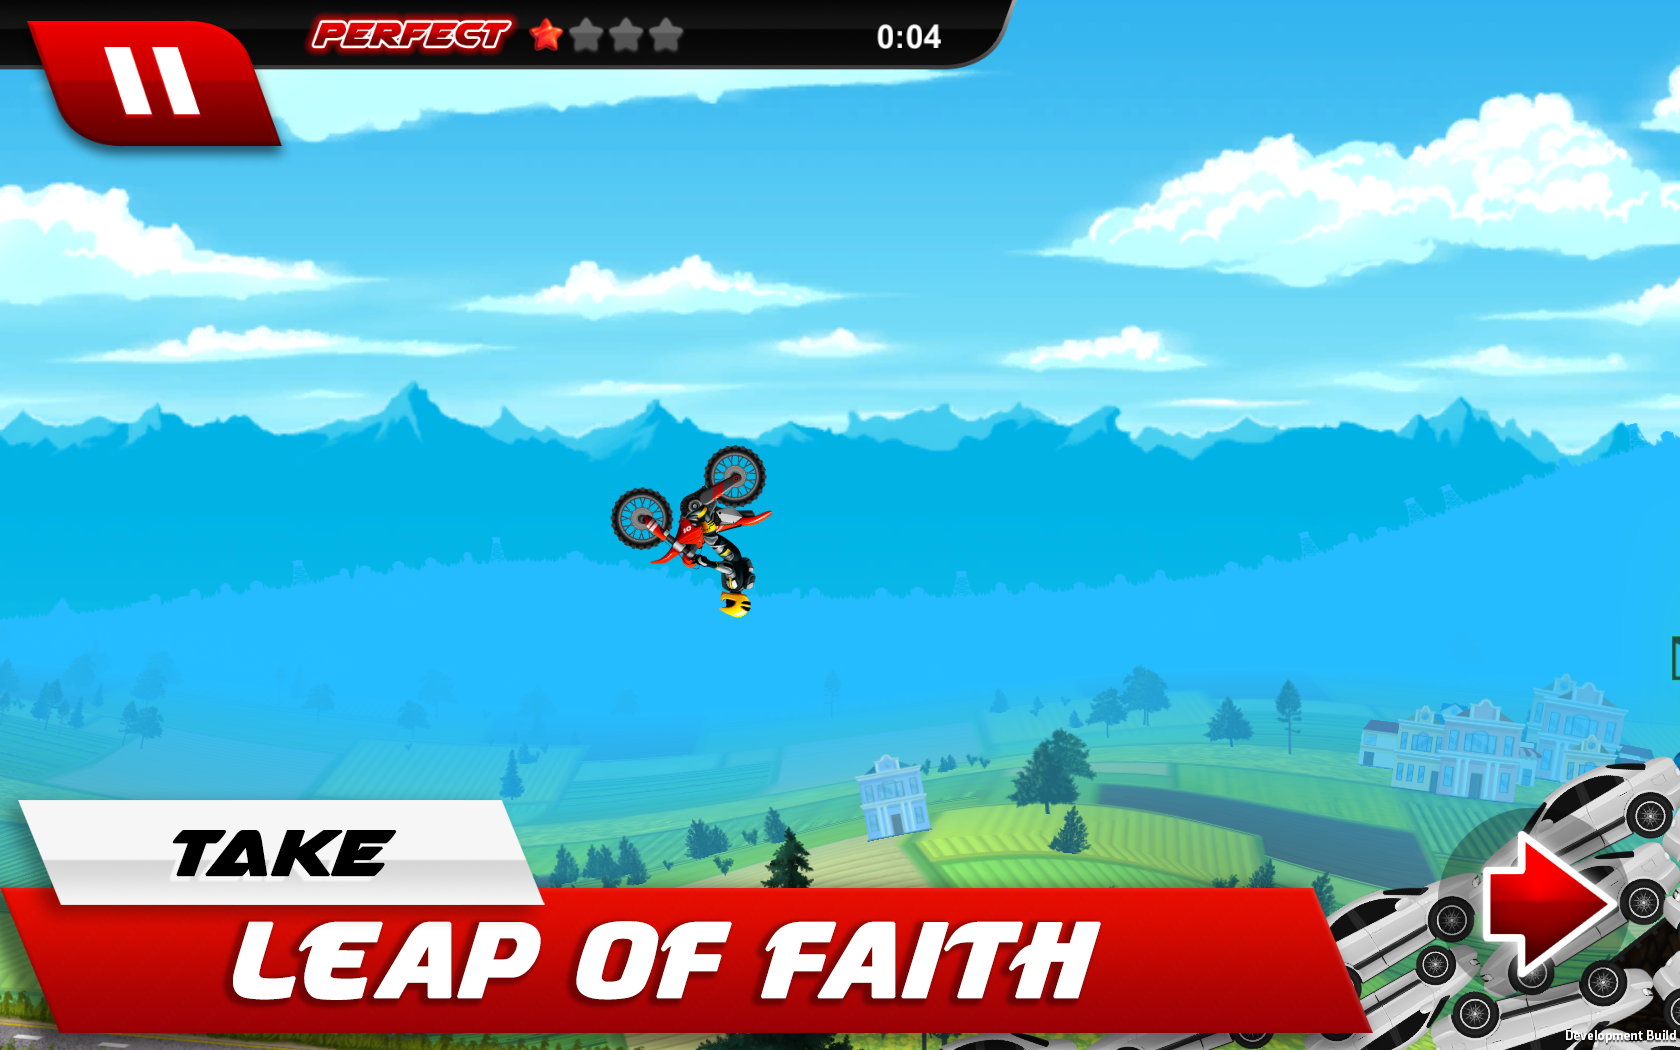 Motorcycle Racer - Bike Gamesのキャプチャ